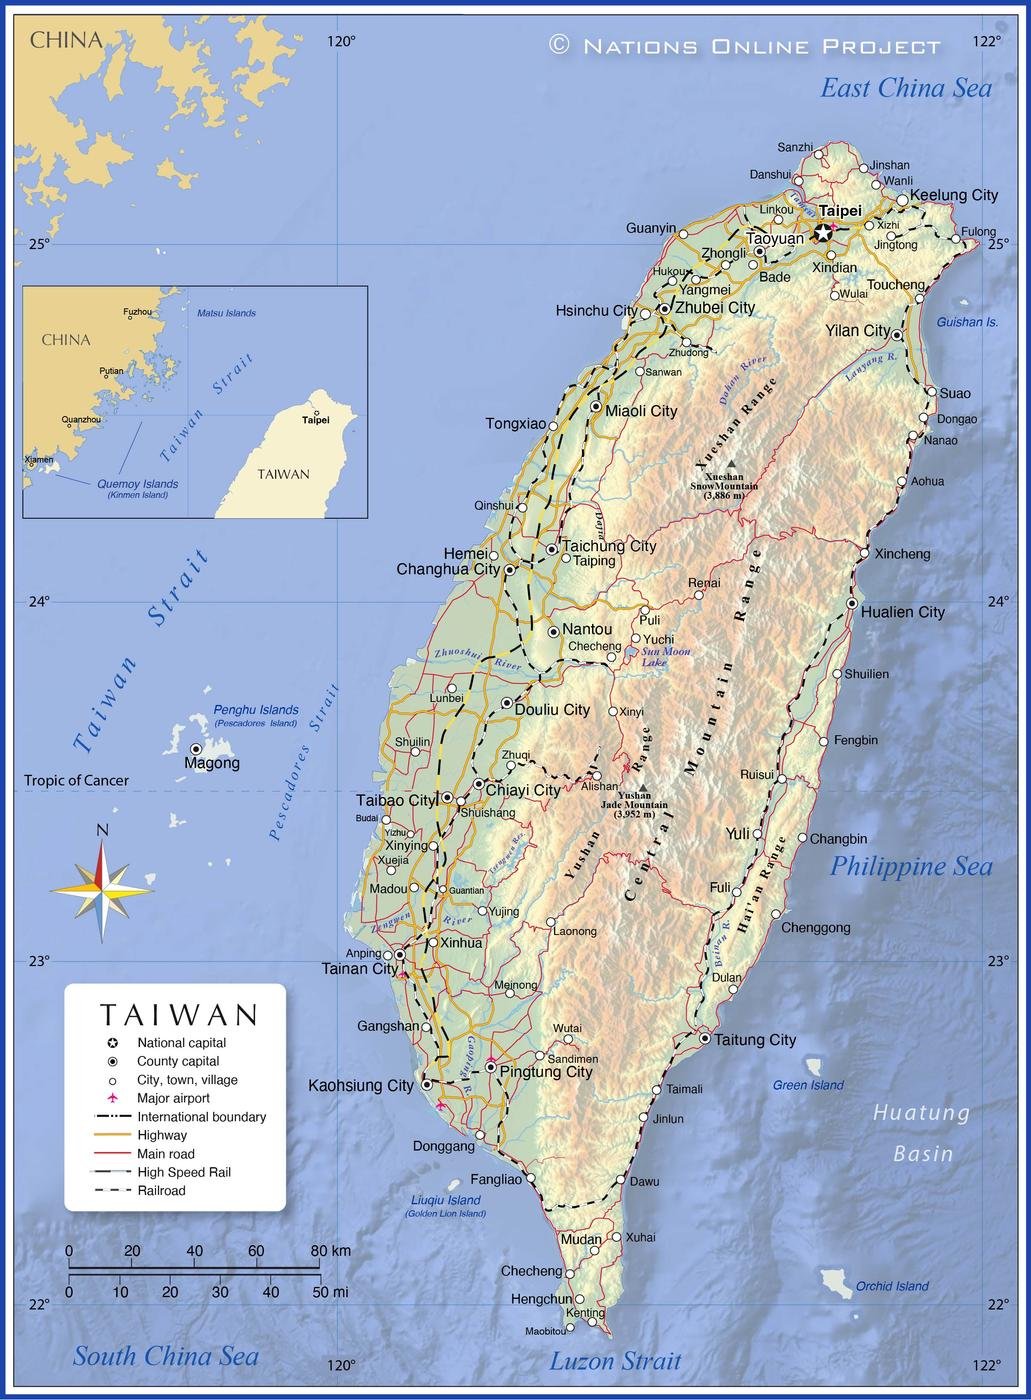 Взято с https://www.nationsonline.org/oneworld/map/taiwan-map.htm